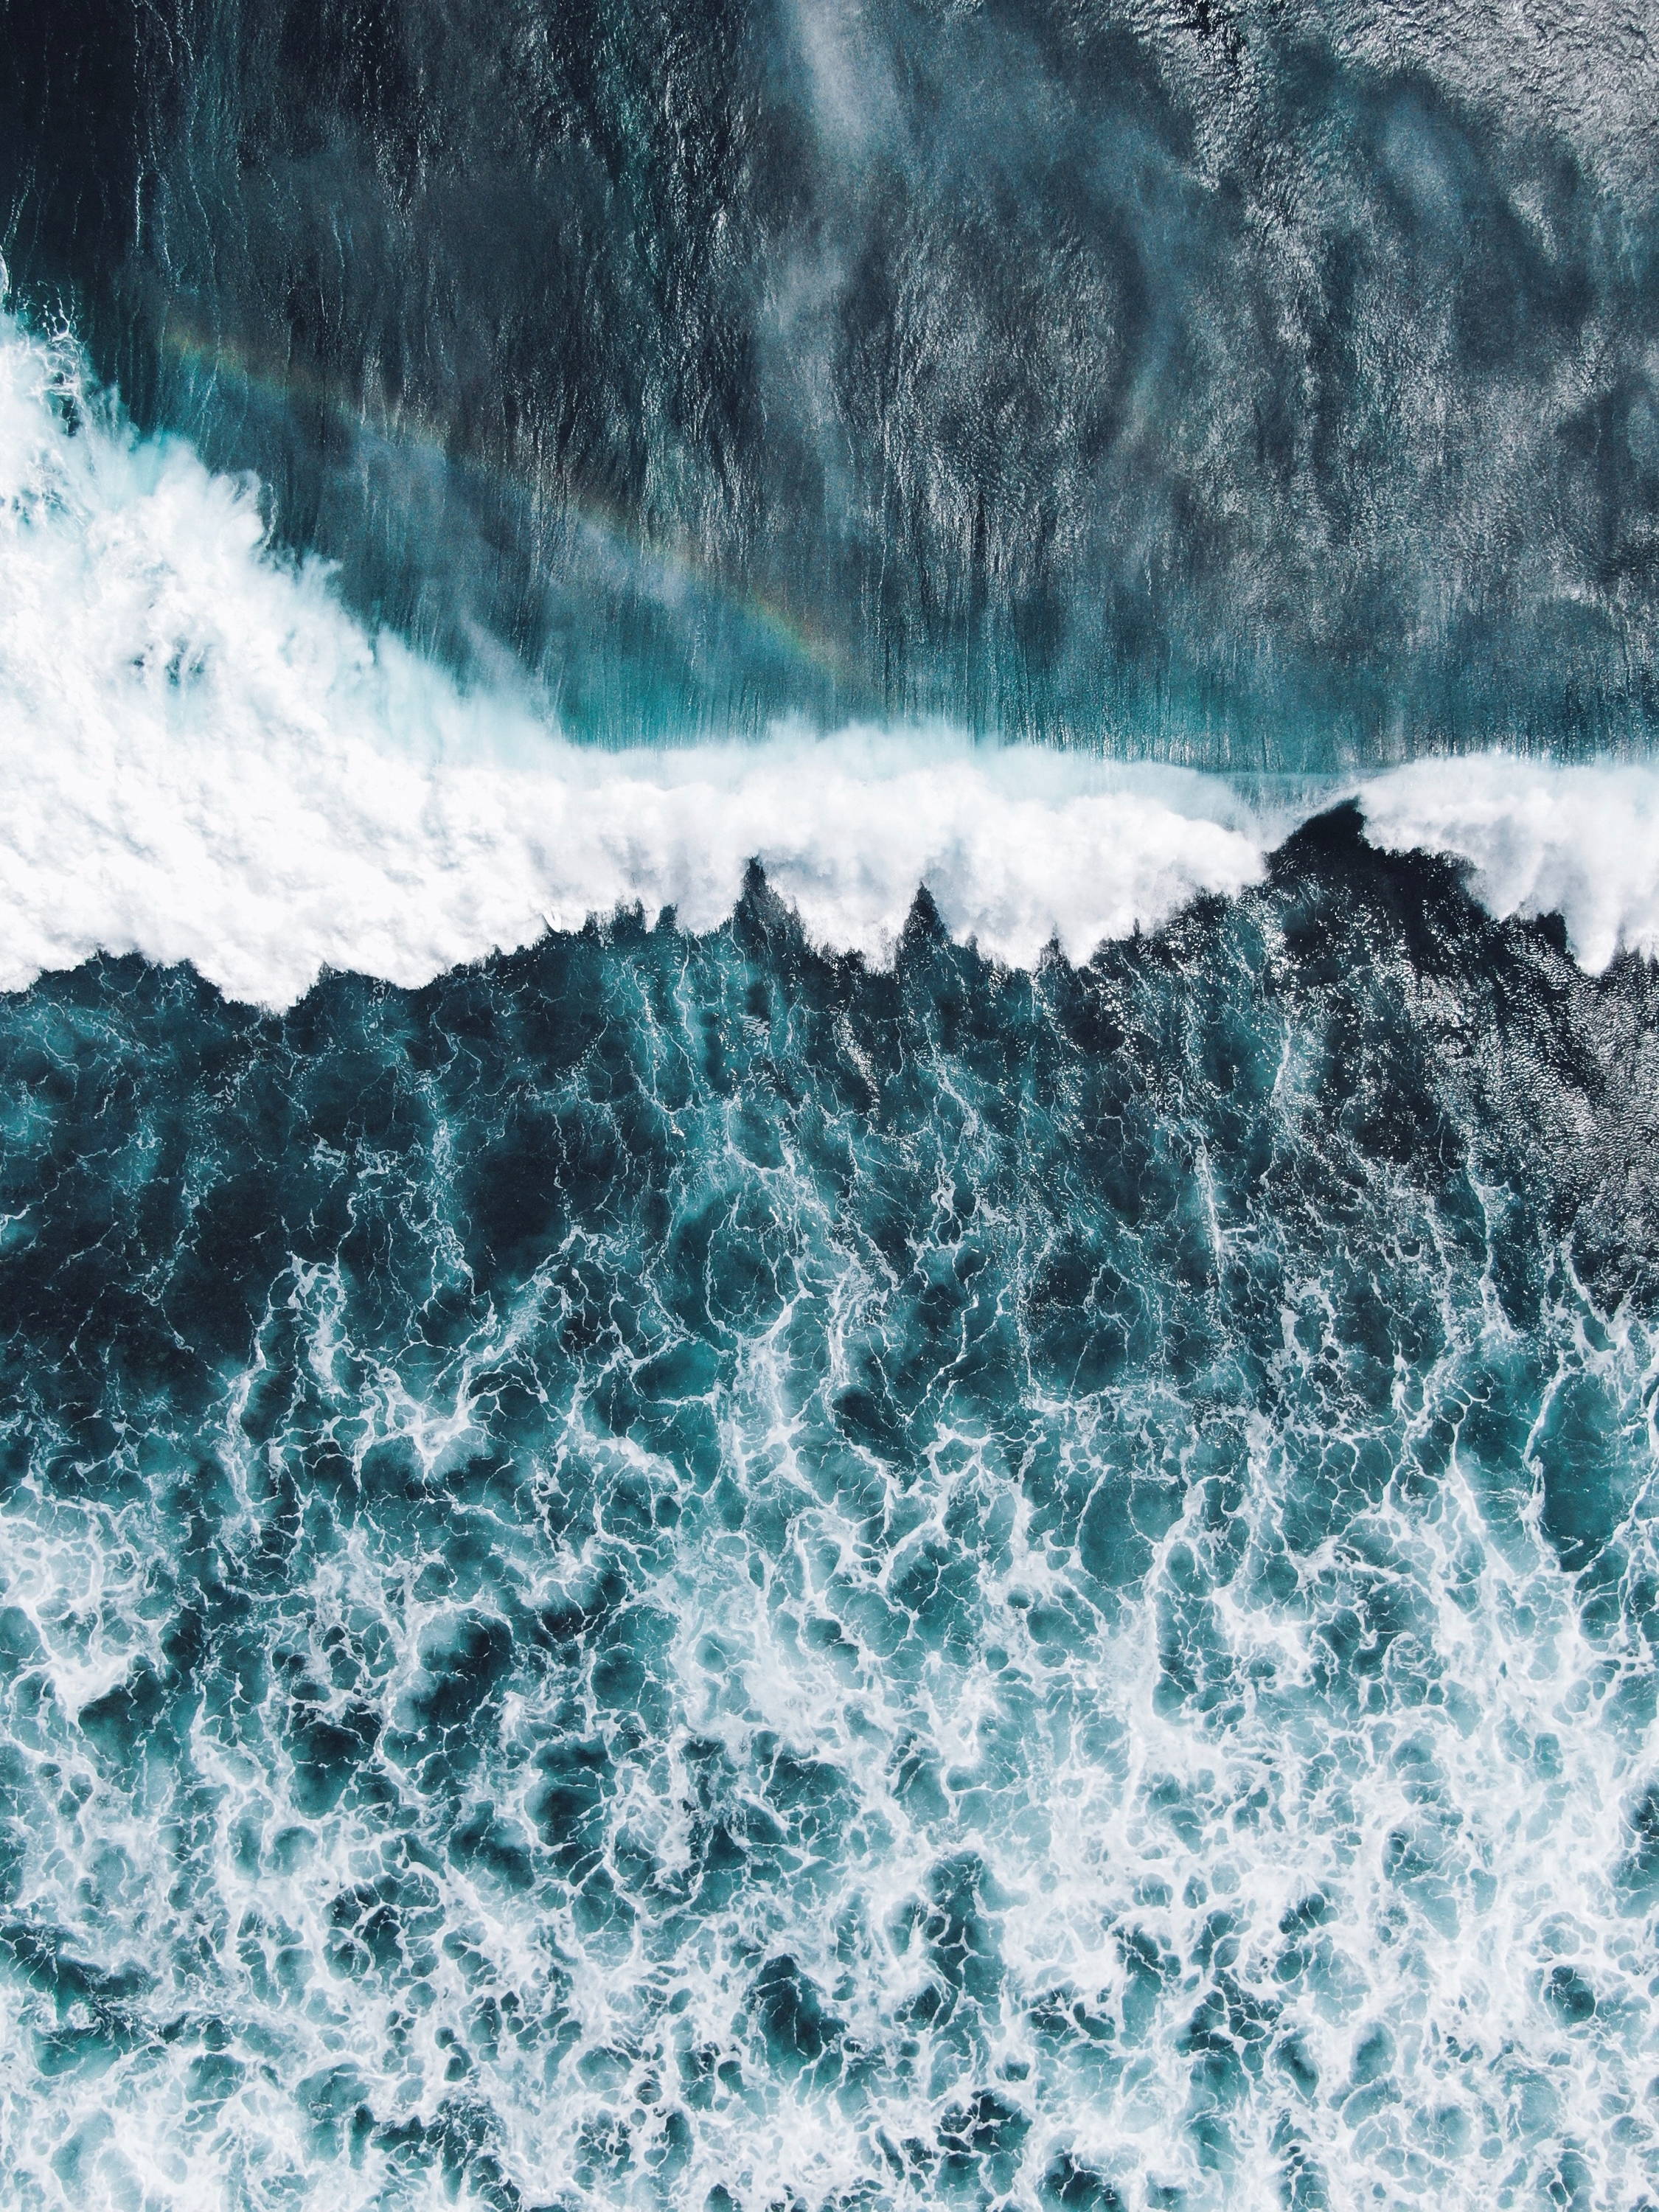 Waves crashing on the ocean